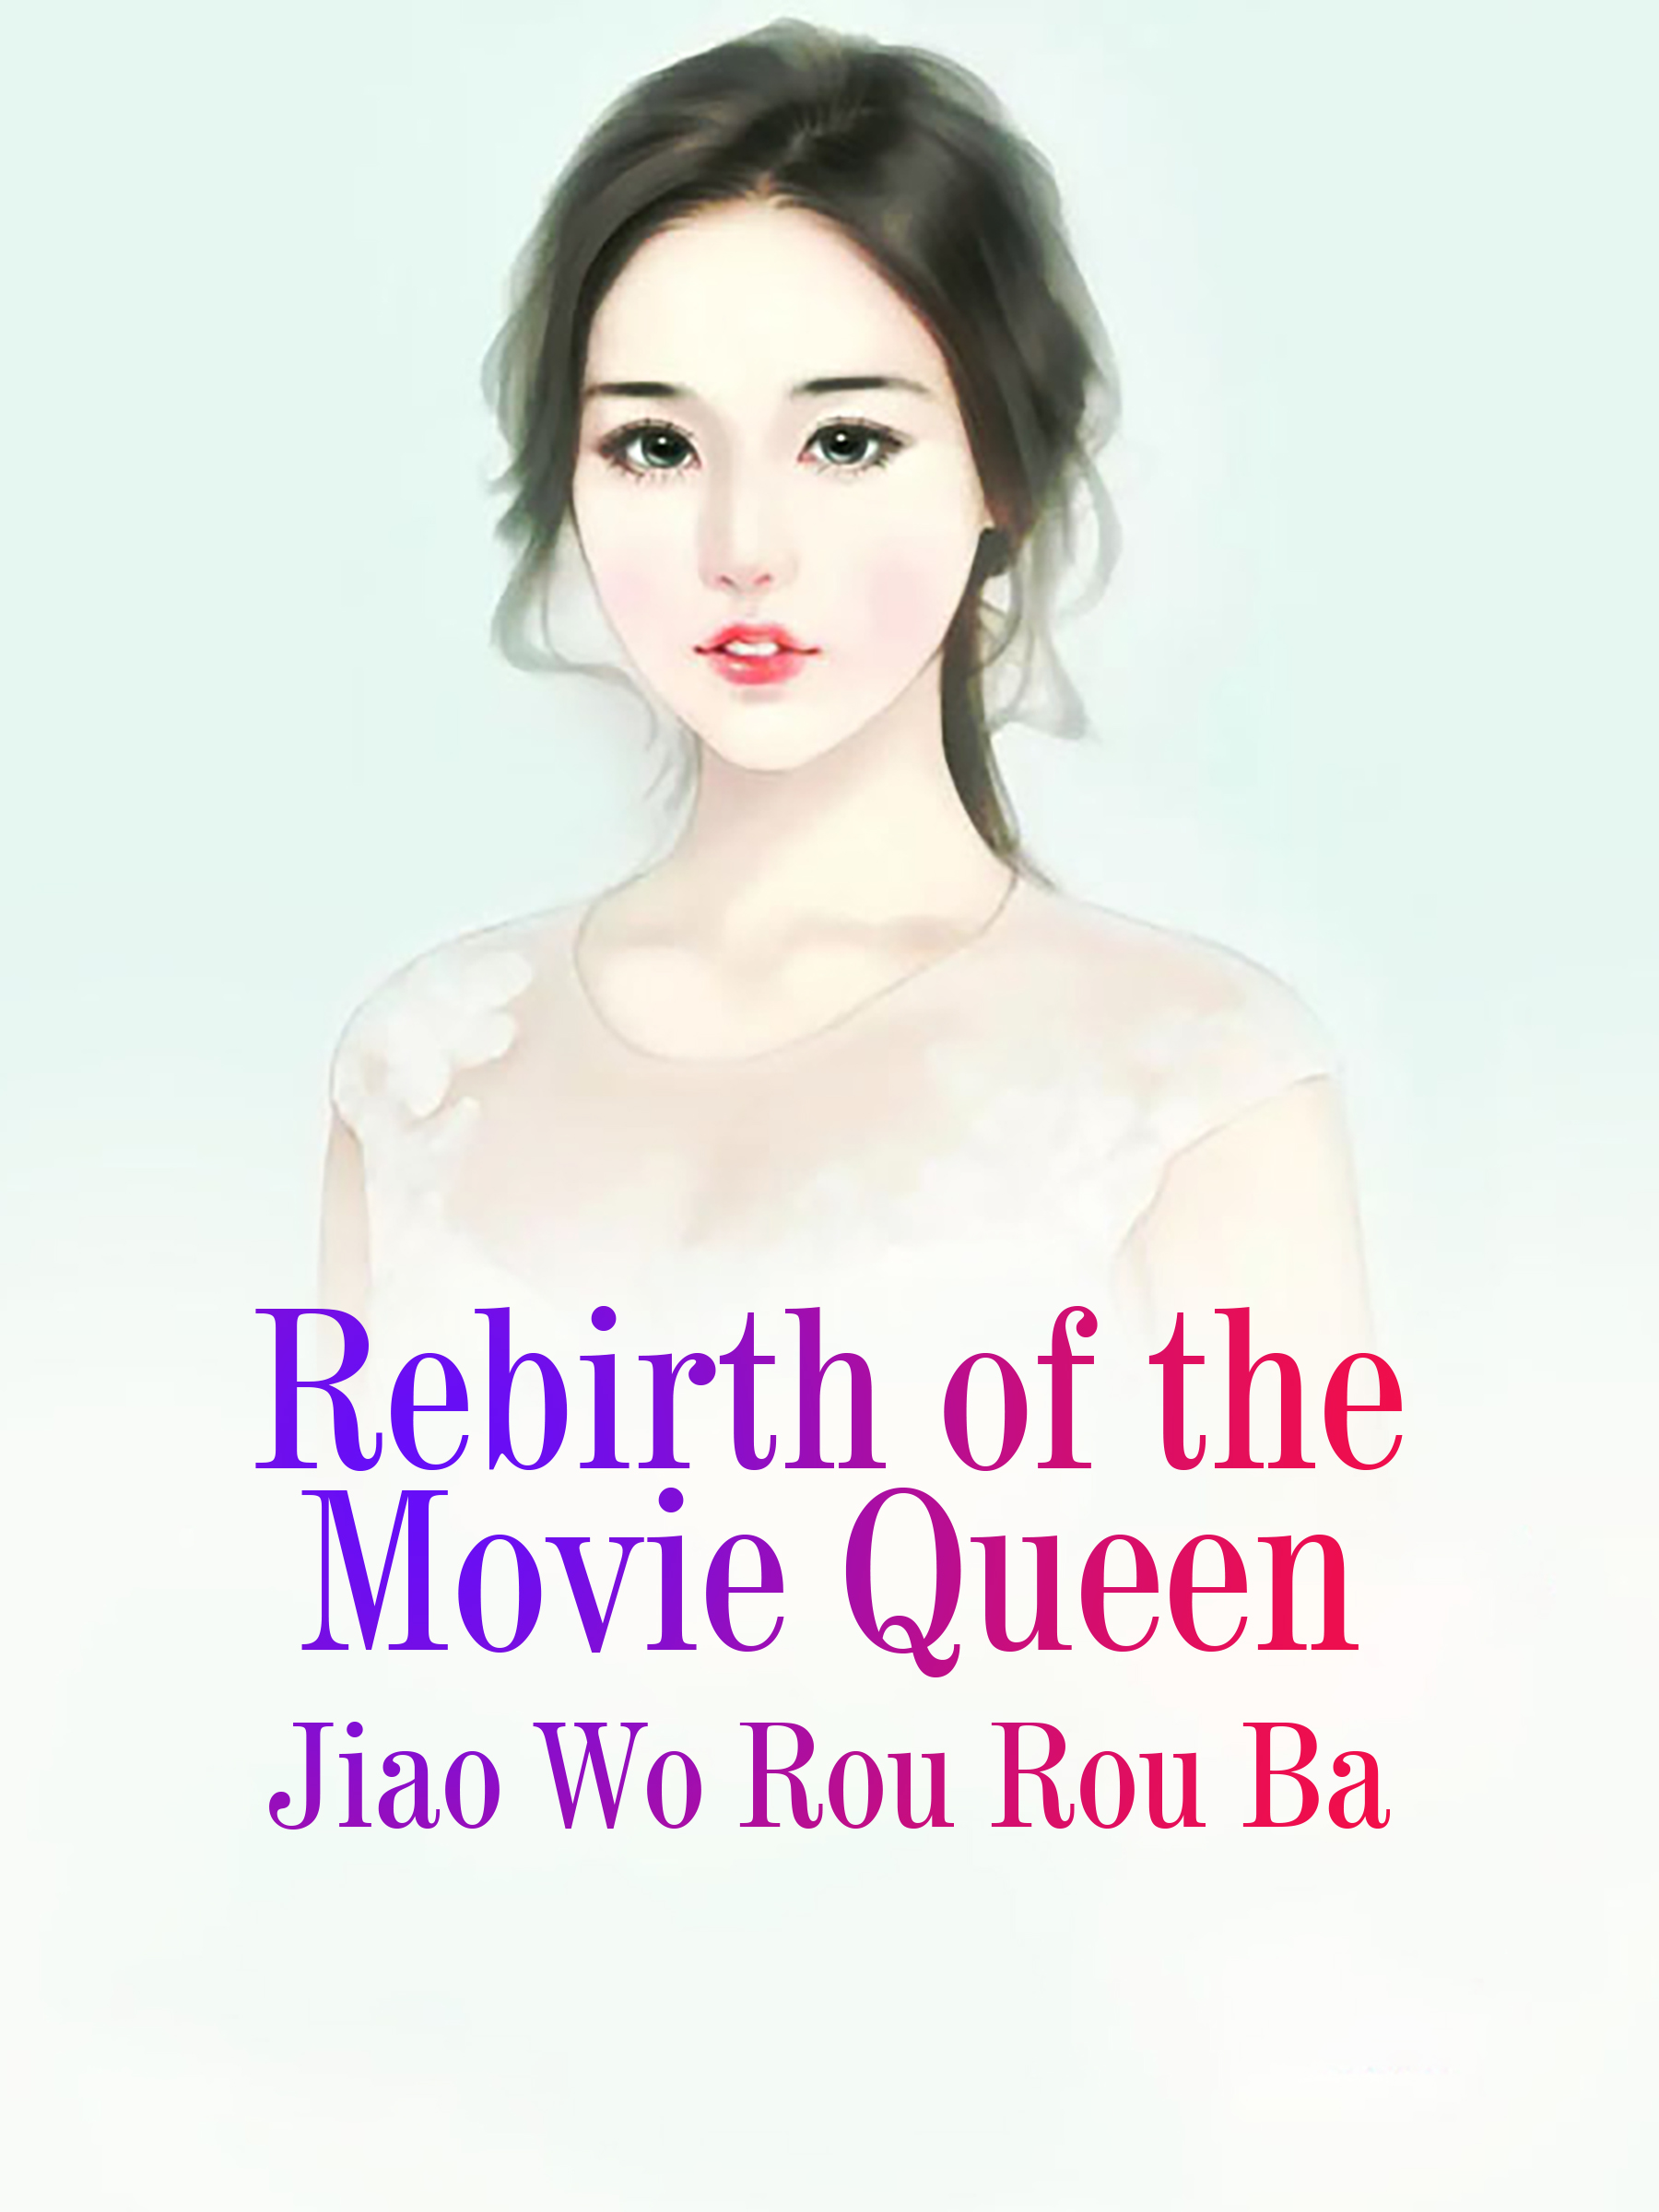 Reborn To Be Movie Queen Rebirth of the Movie Queen by: Jiao Worourouba - 9781647813086 | RedShelf